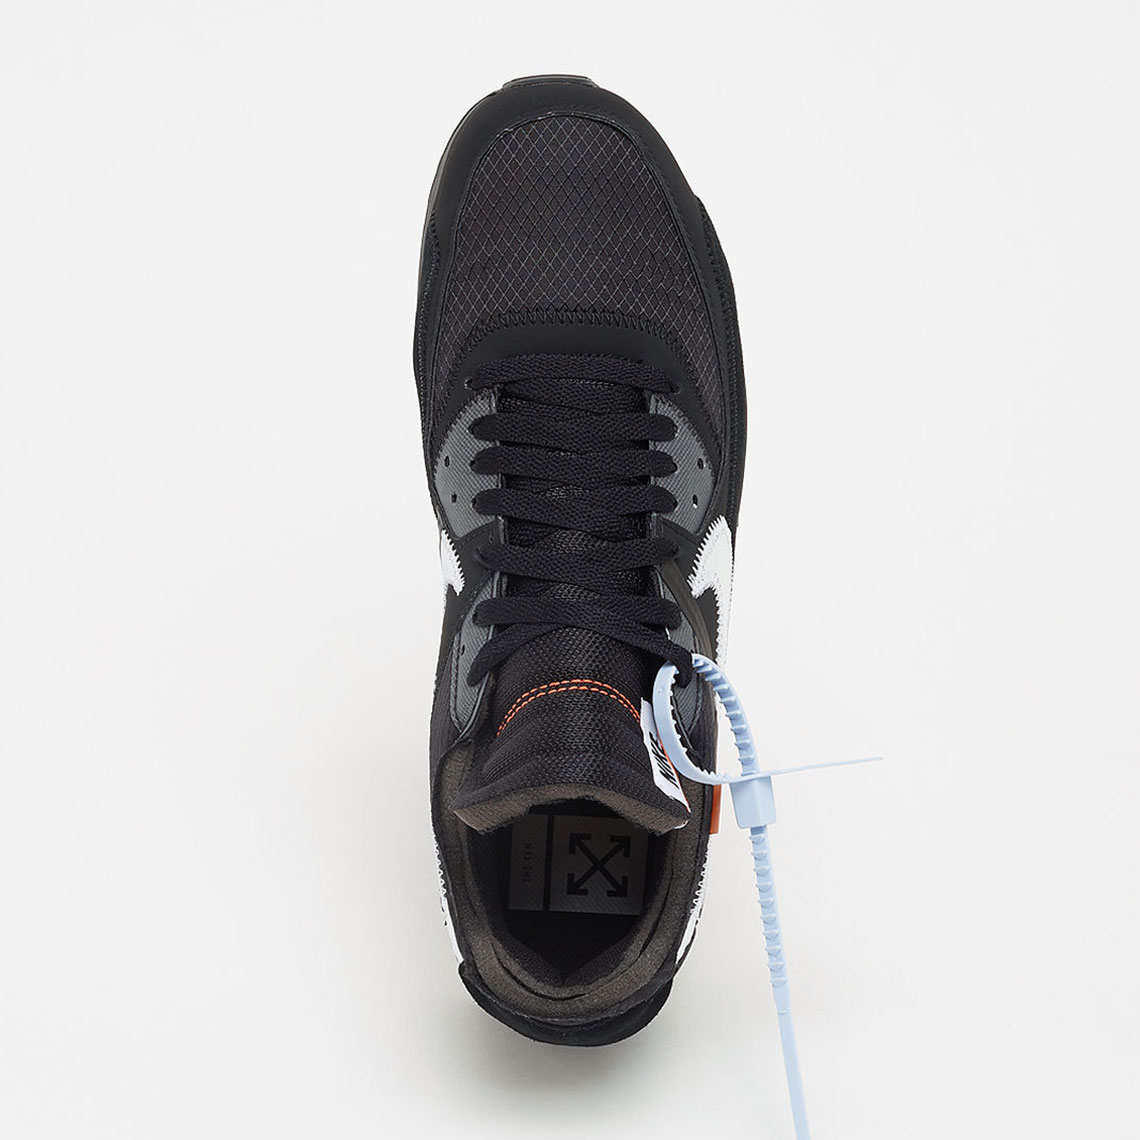 Off White Nike Air Max 90 Black White Store List | SneakerNews.com